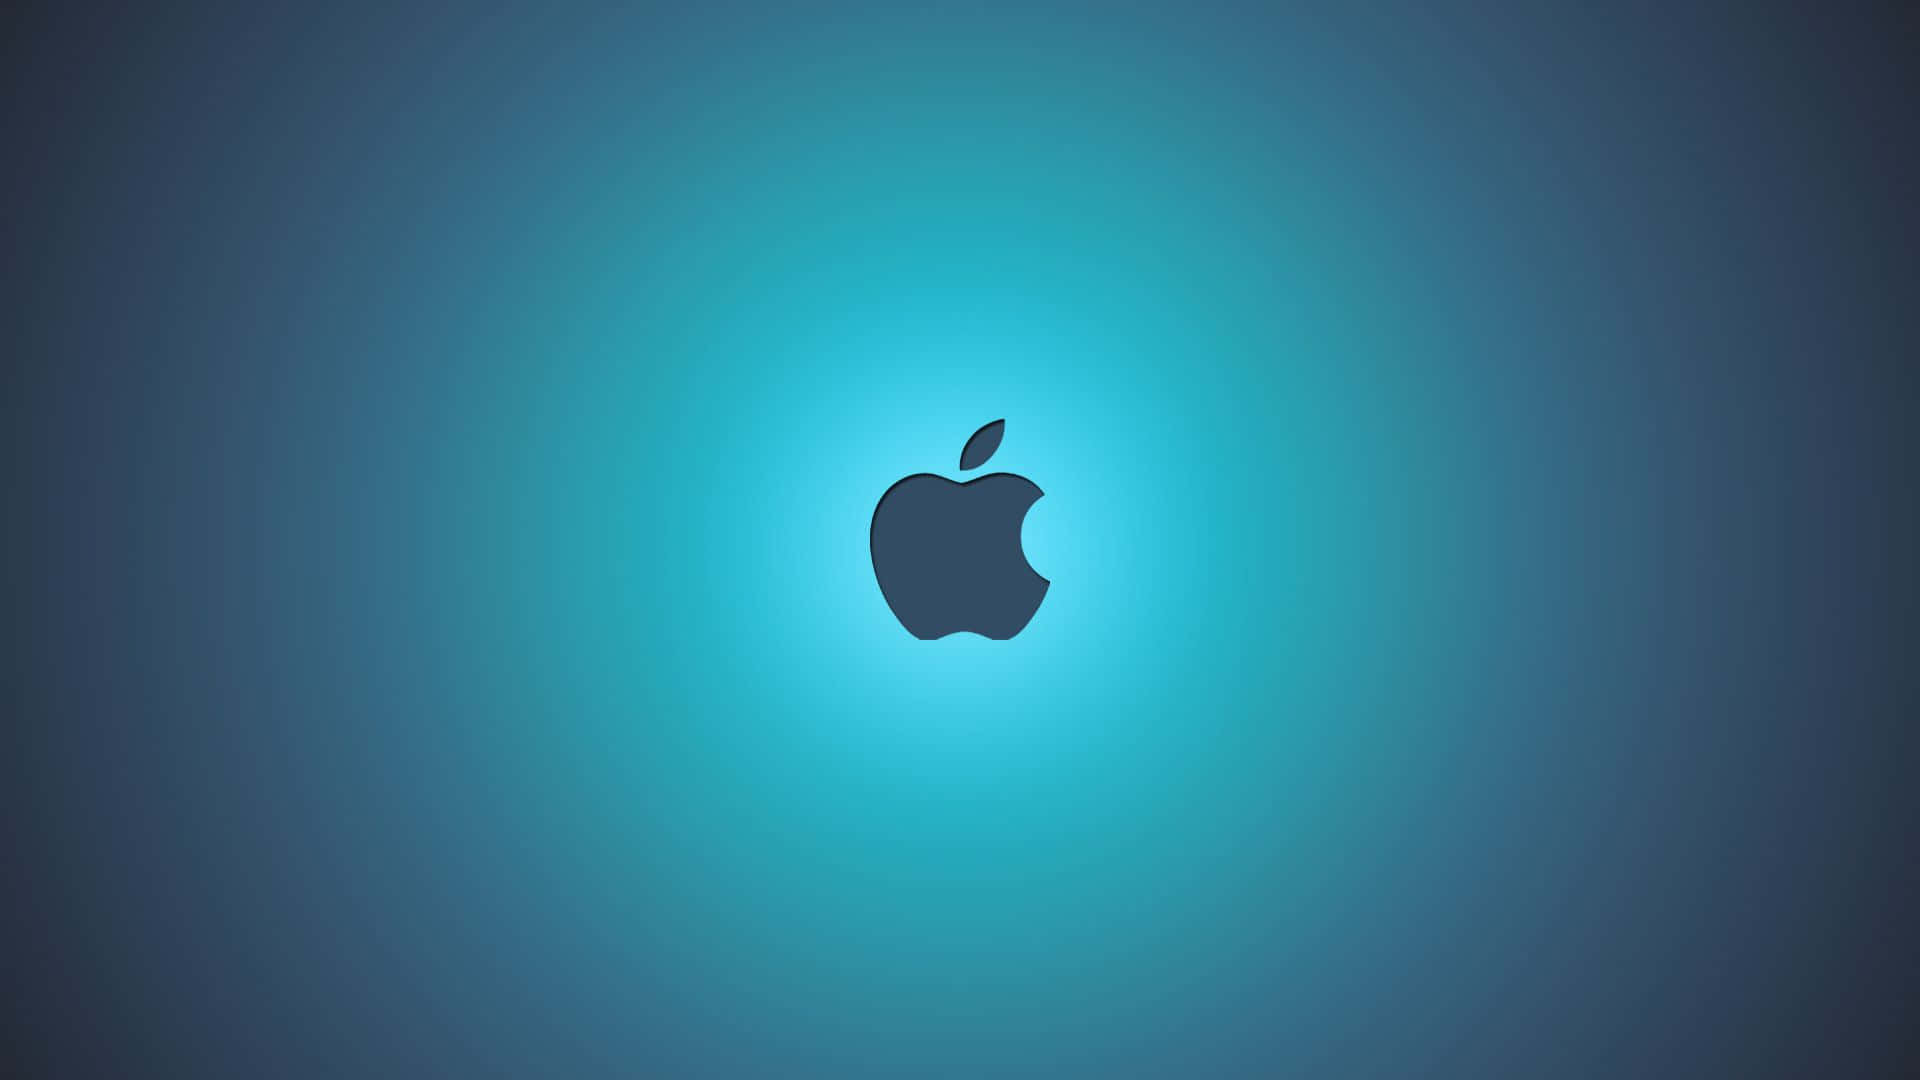 Download Apple Logo Wallpapers Hd Wallpaper | Wallpapers.com